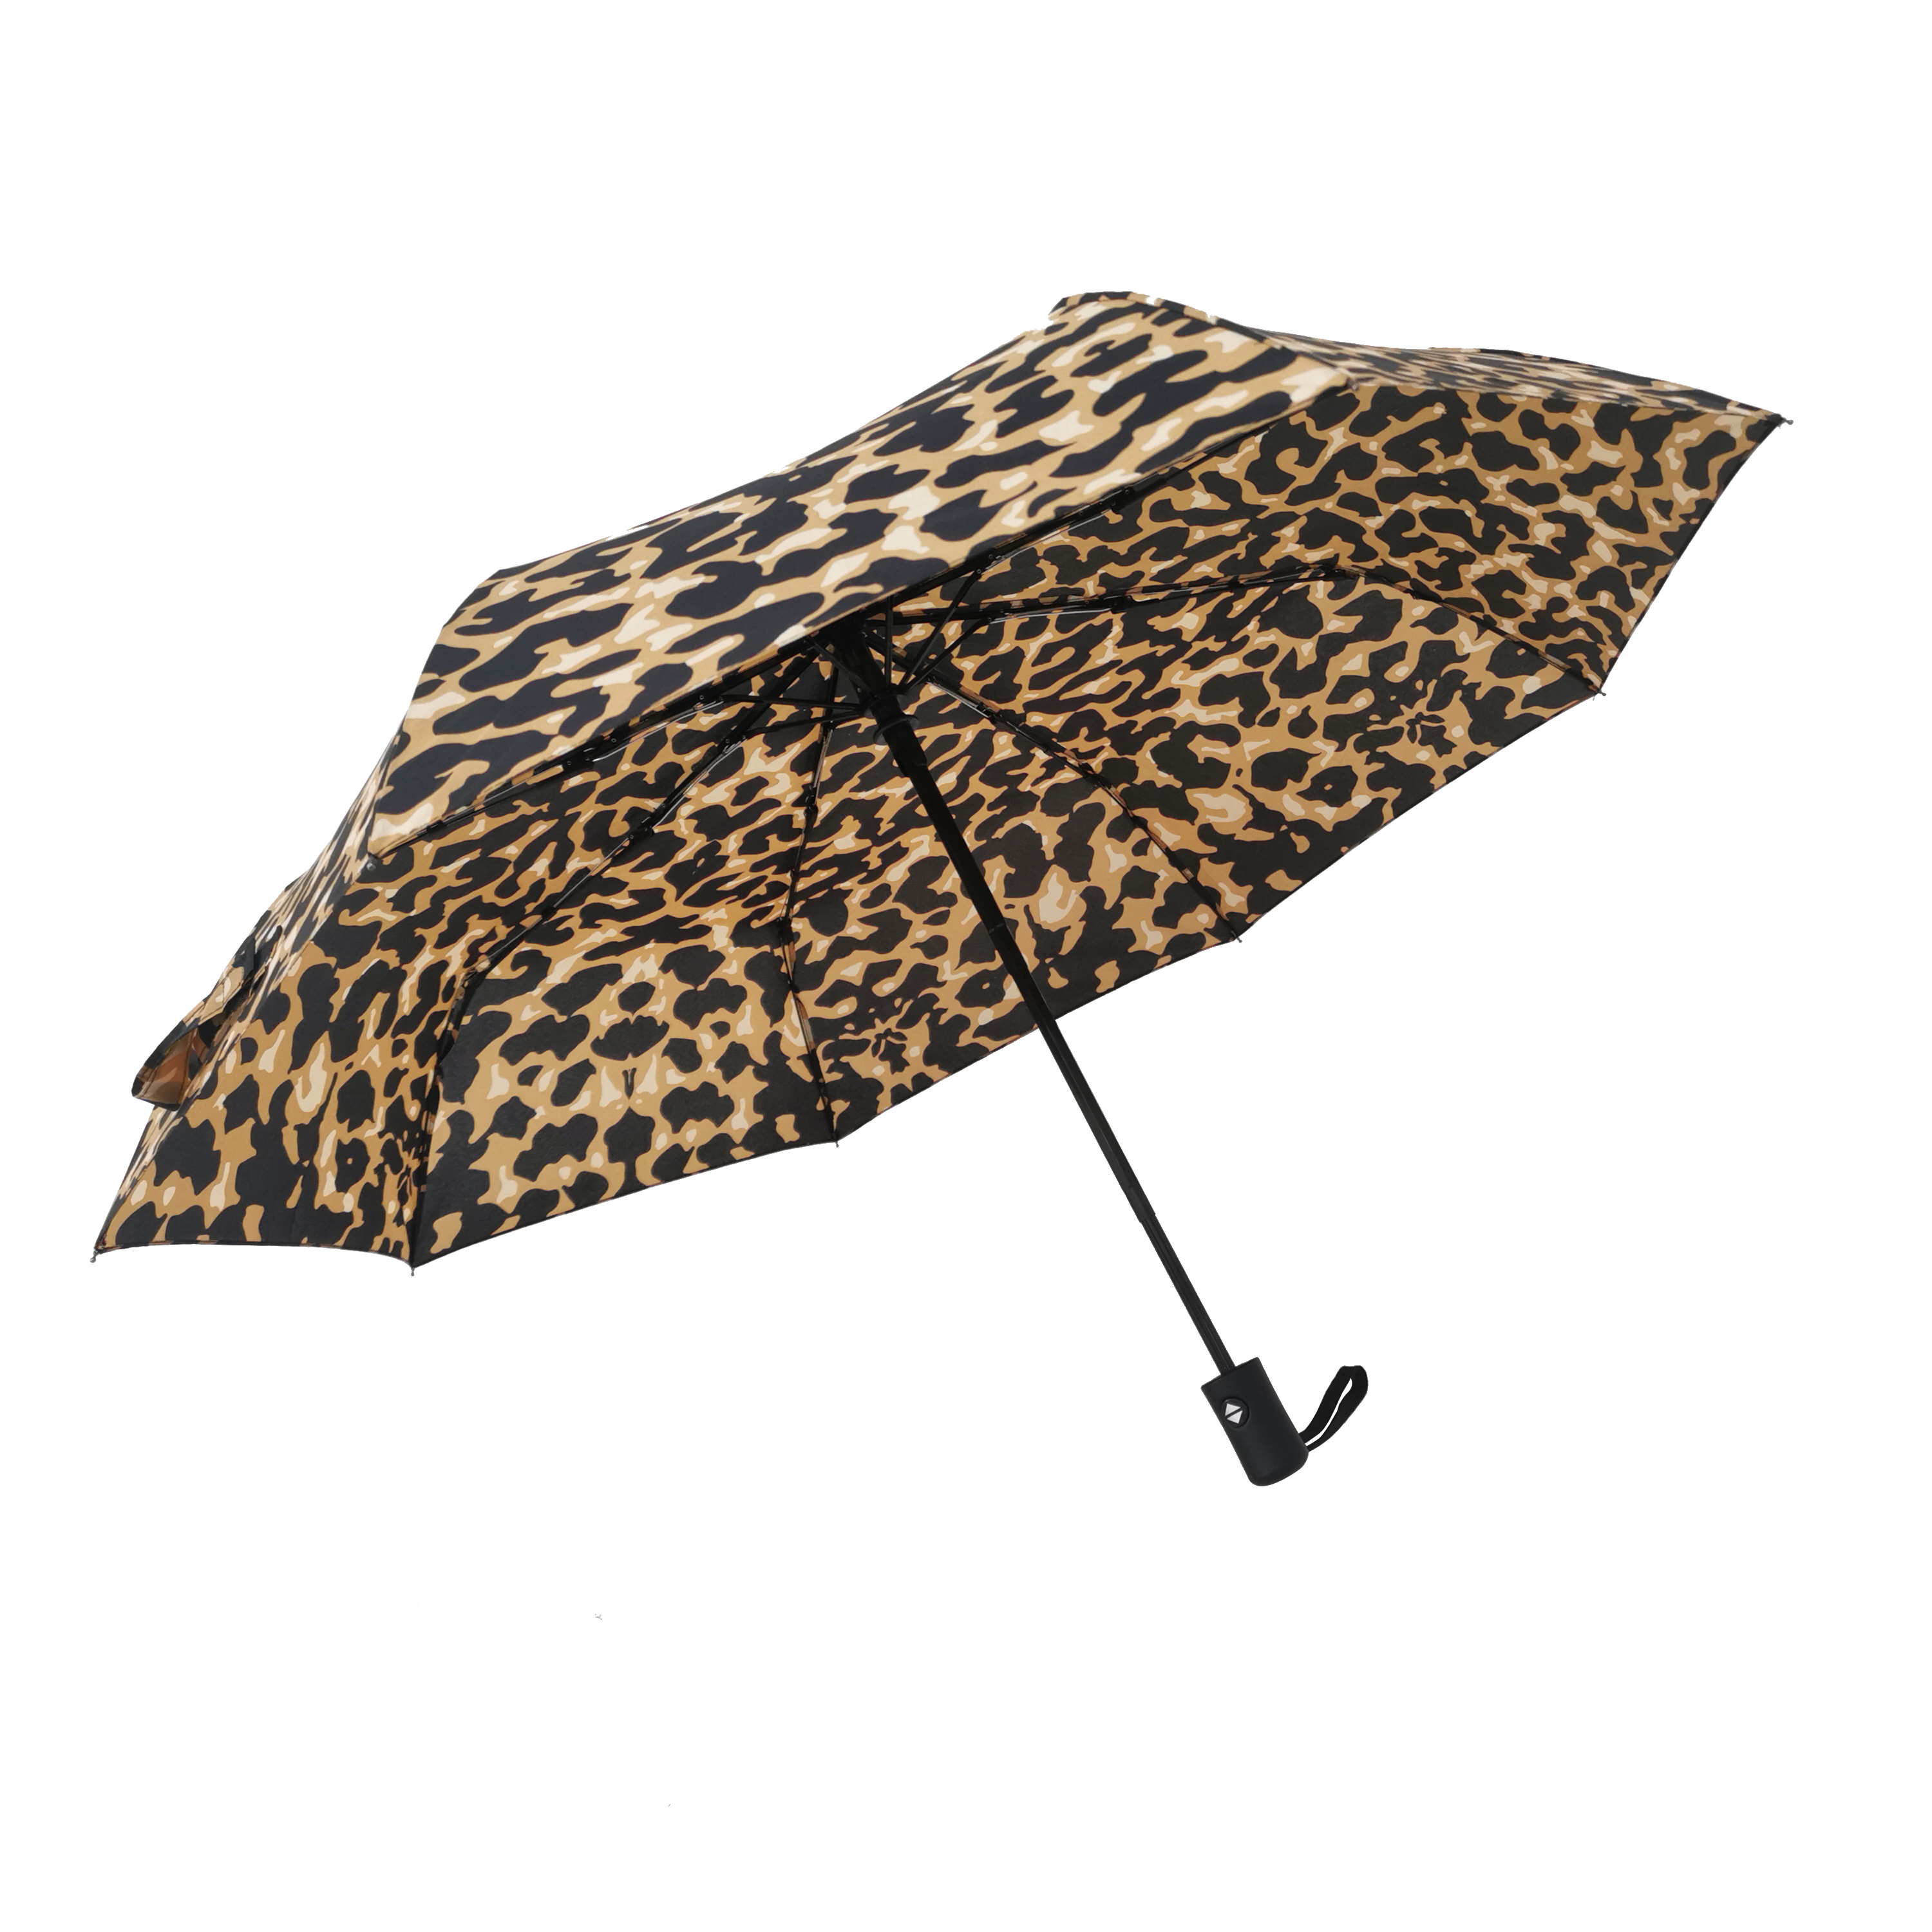 https://www.hodaumbrella.com/ultra-low-price-lding-umbrella-product/